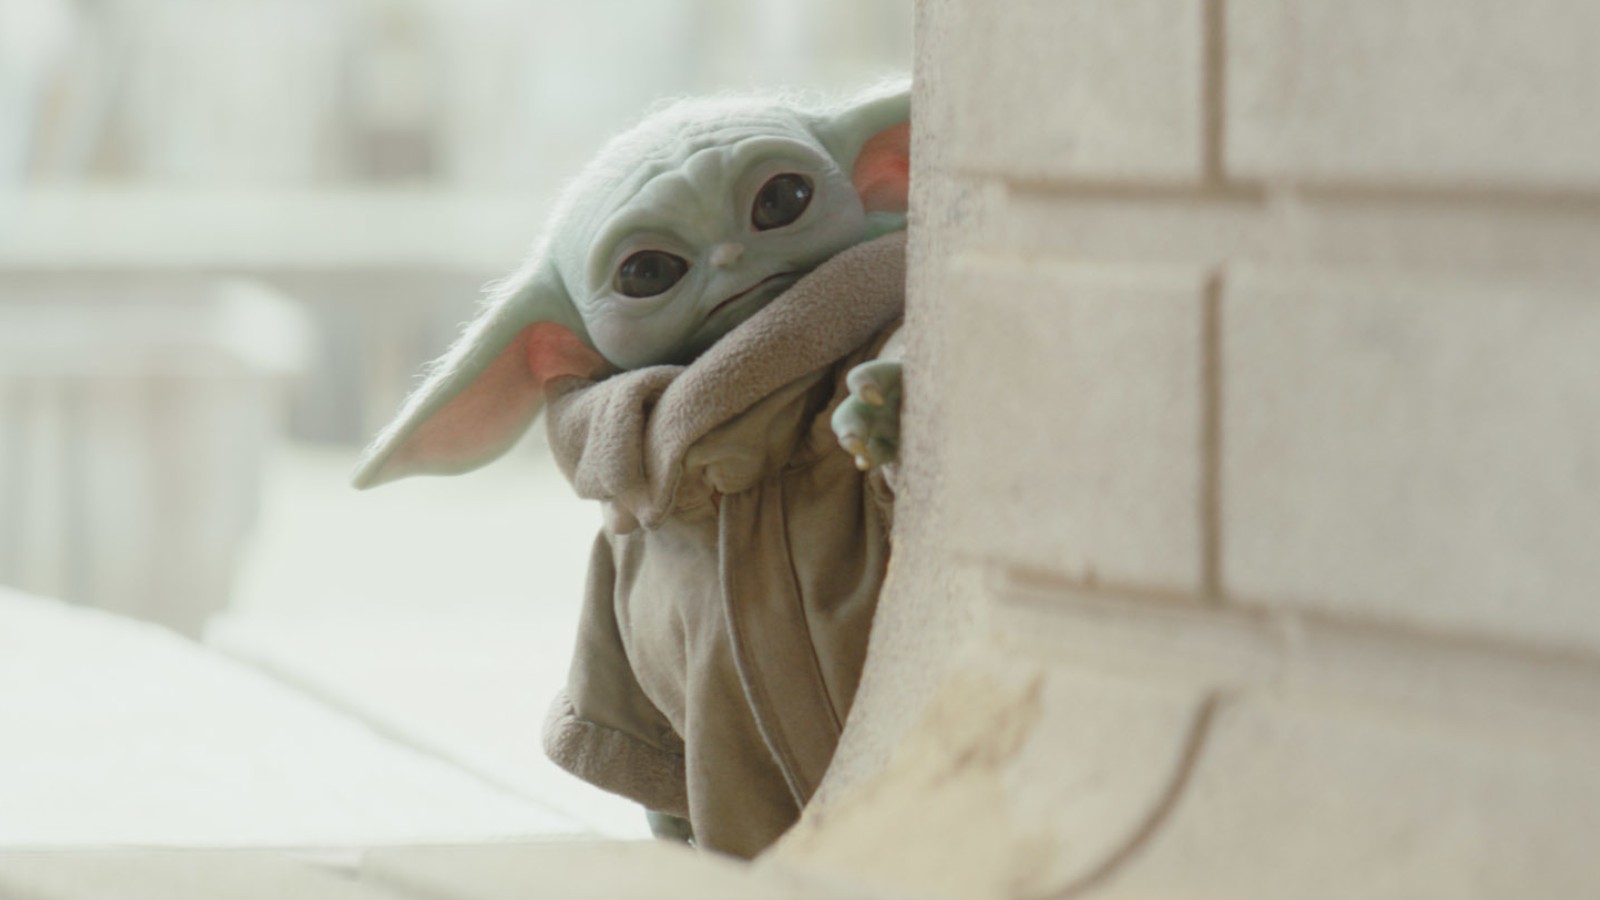 Baby Yoda Avatar Now Available on Disney+ 